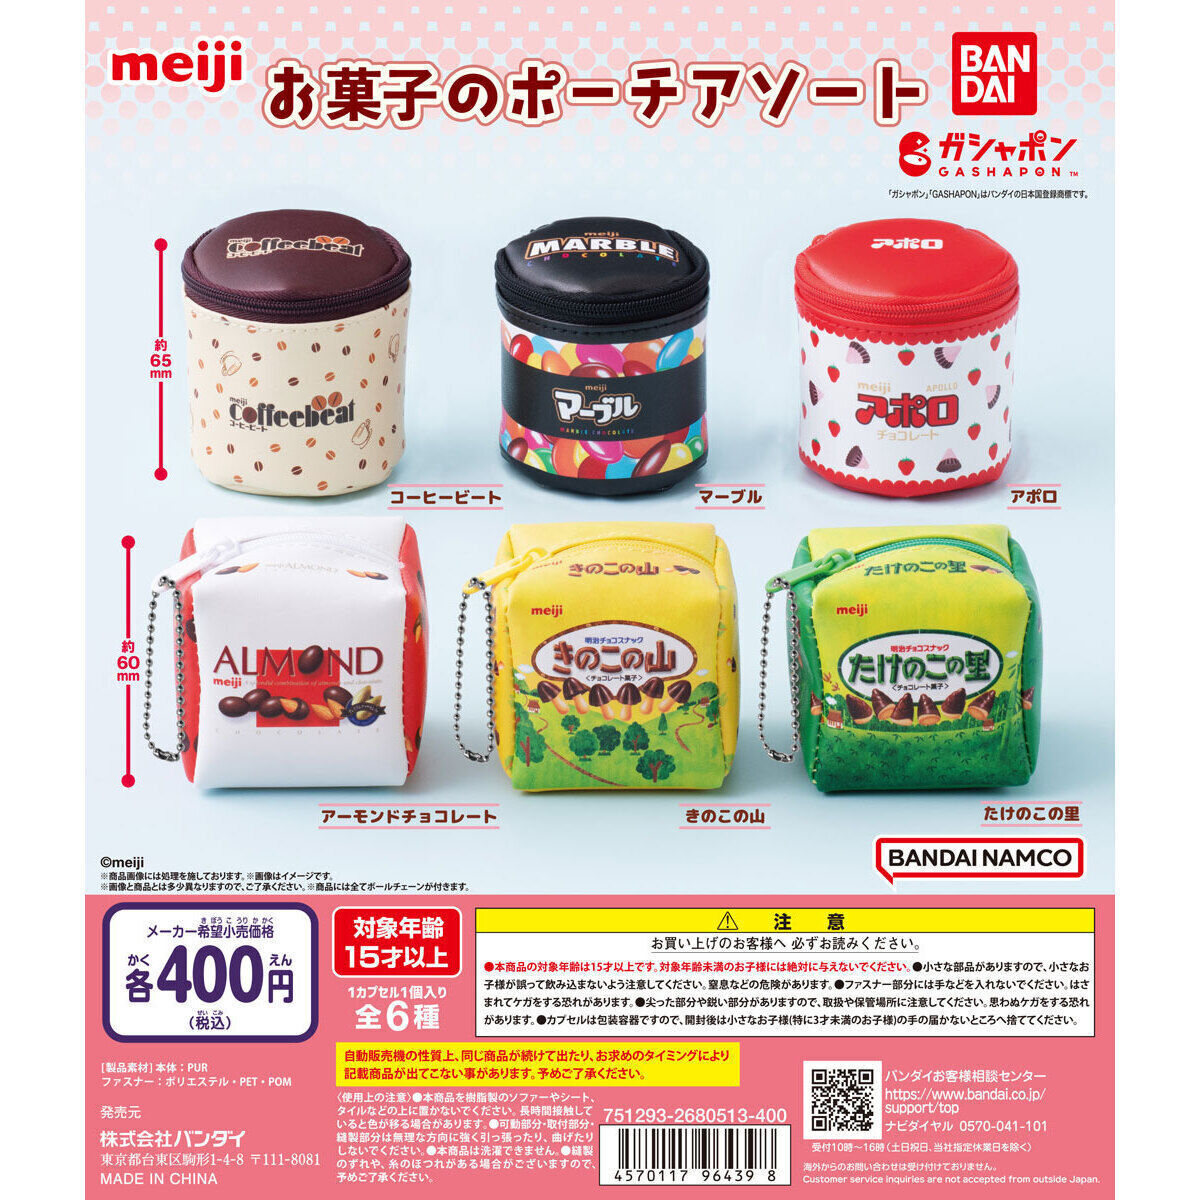 Capsule Toy Gashapon Complete set Meiji Okashi Assort Pouch